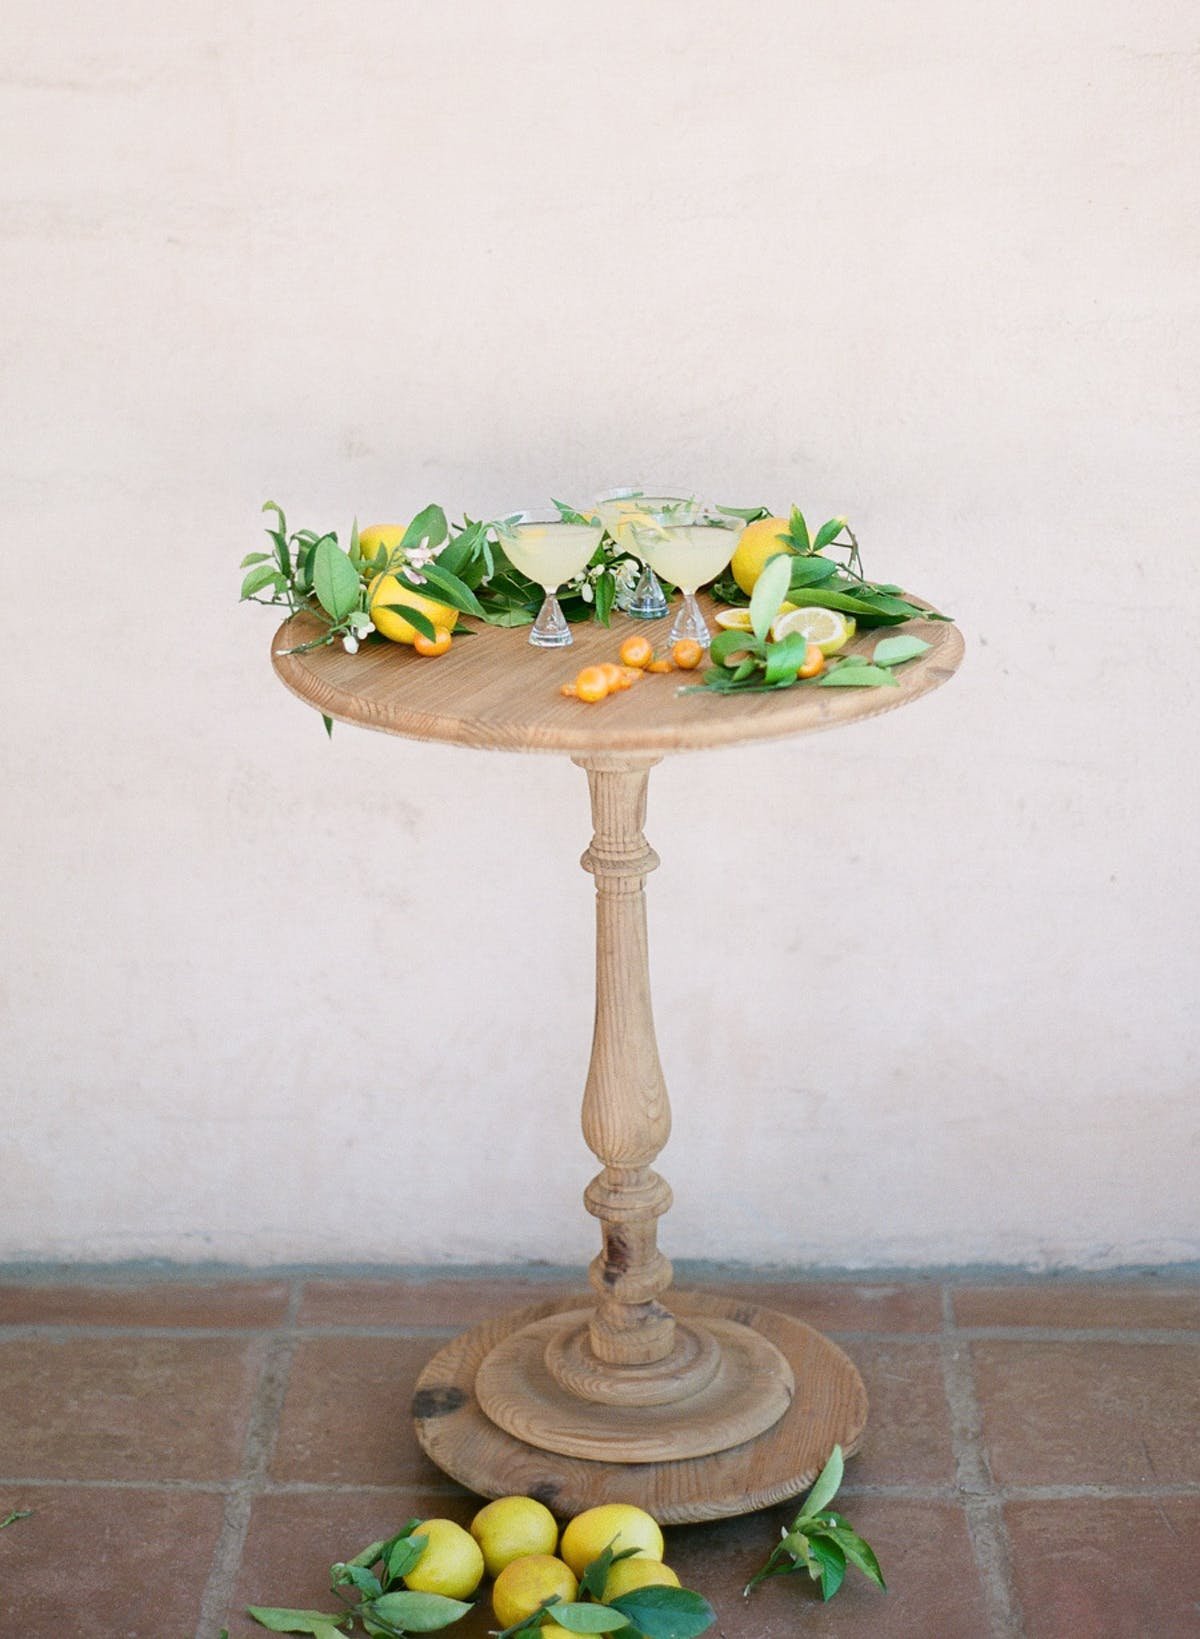 www.santabarbarawedding.com | Koman Photography | Santa Barbara Historical Museum | Kelly Oshiro | Coco Rose Design | Shaun Belway | Cocktails with Lemon and Flower Decor